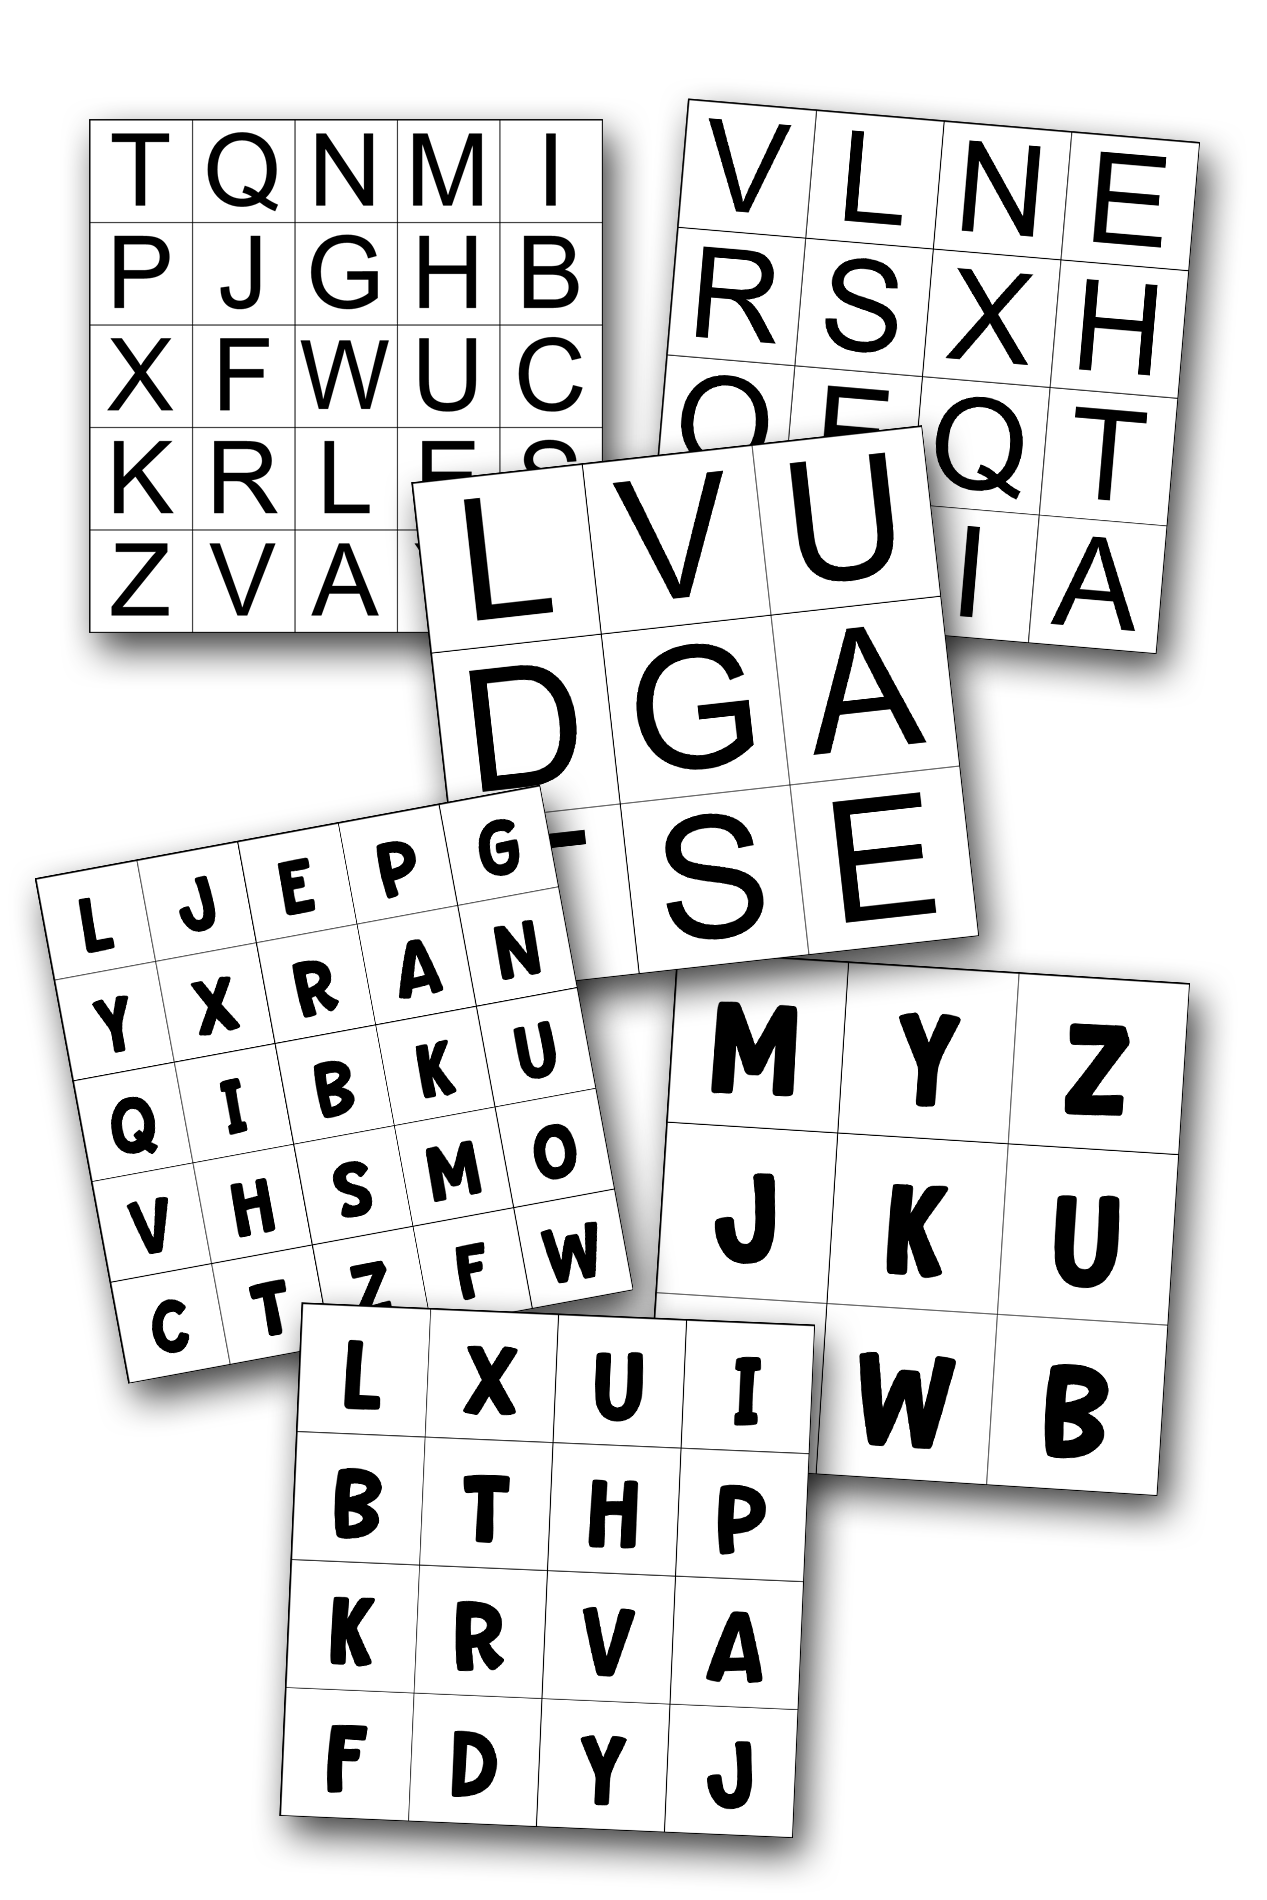 Alphabet Bingo Template Set 